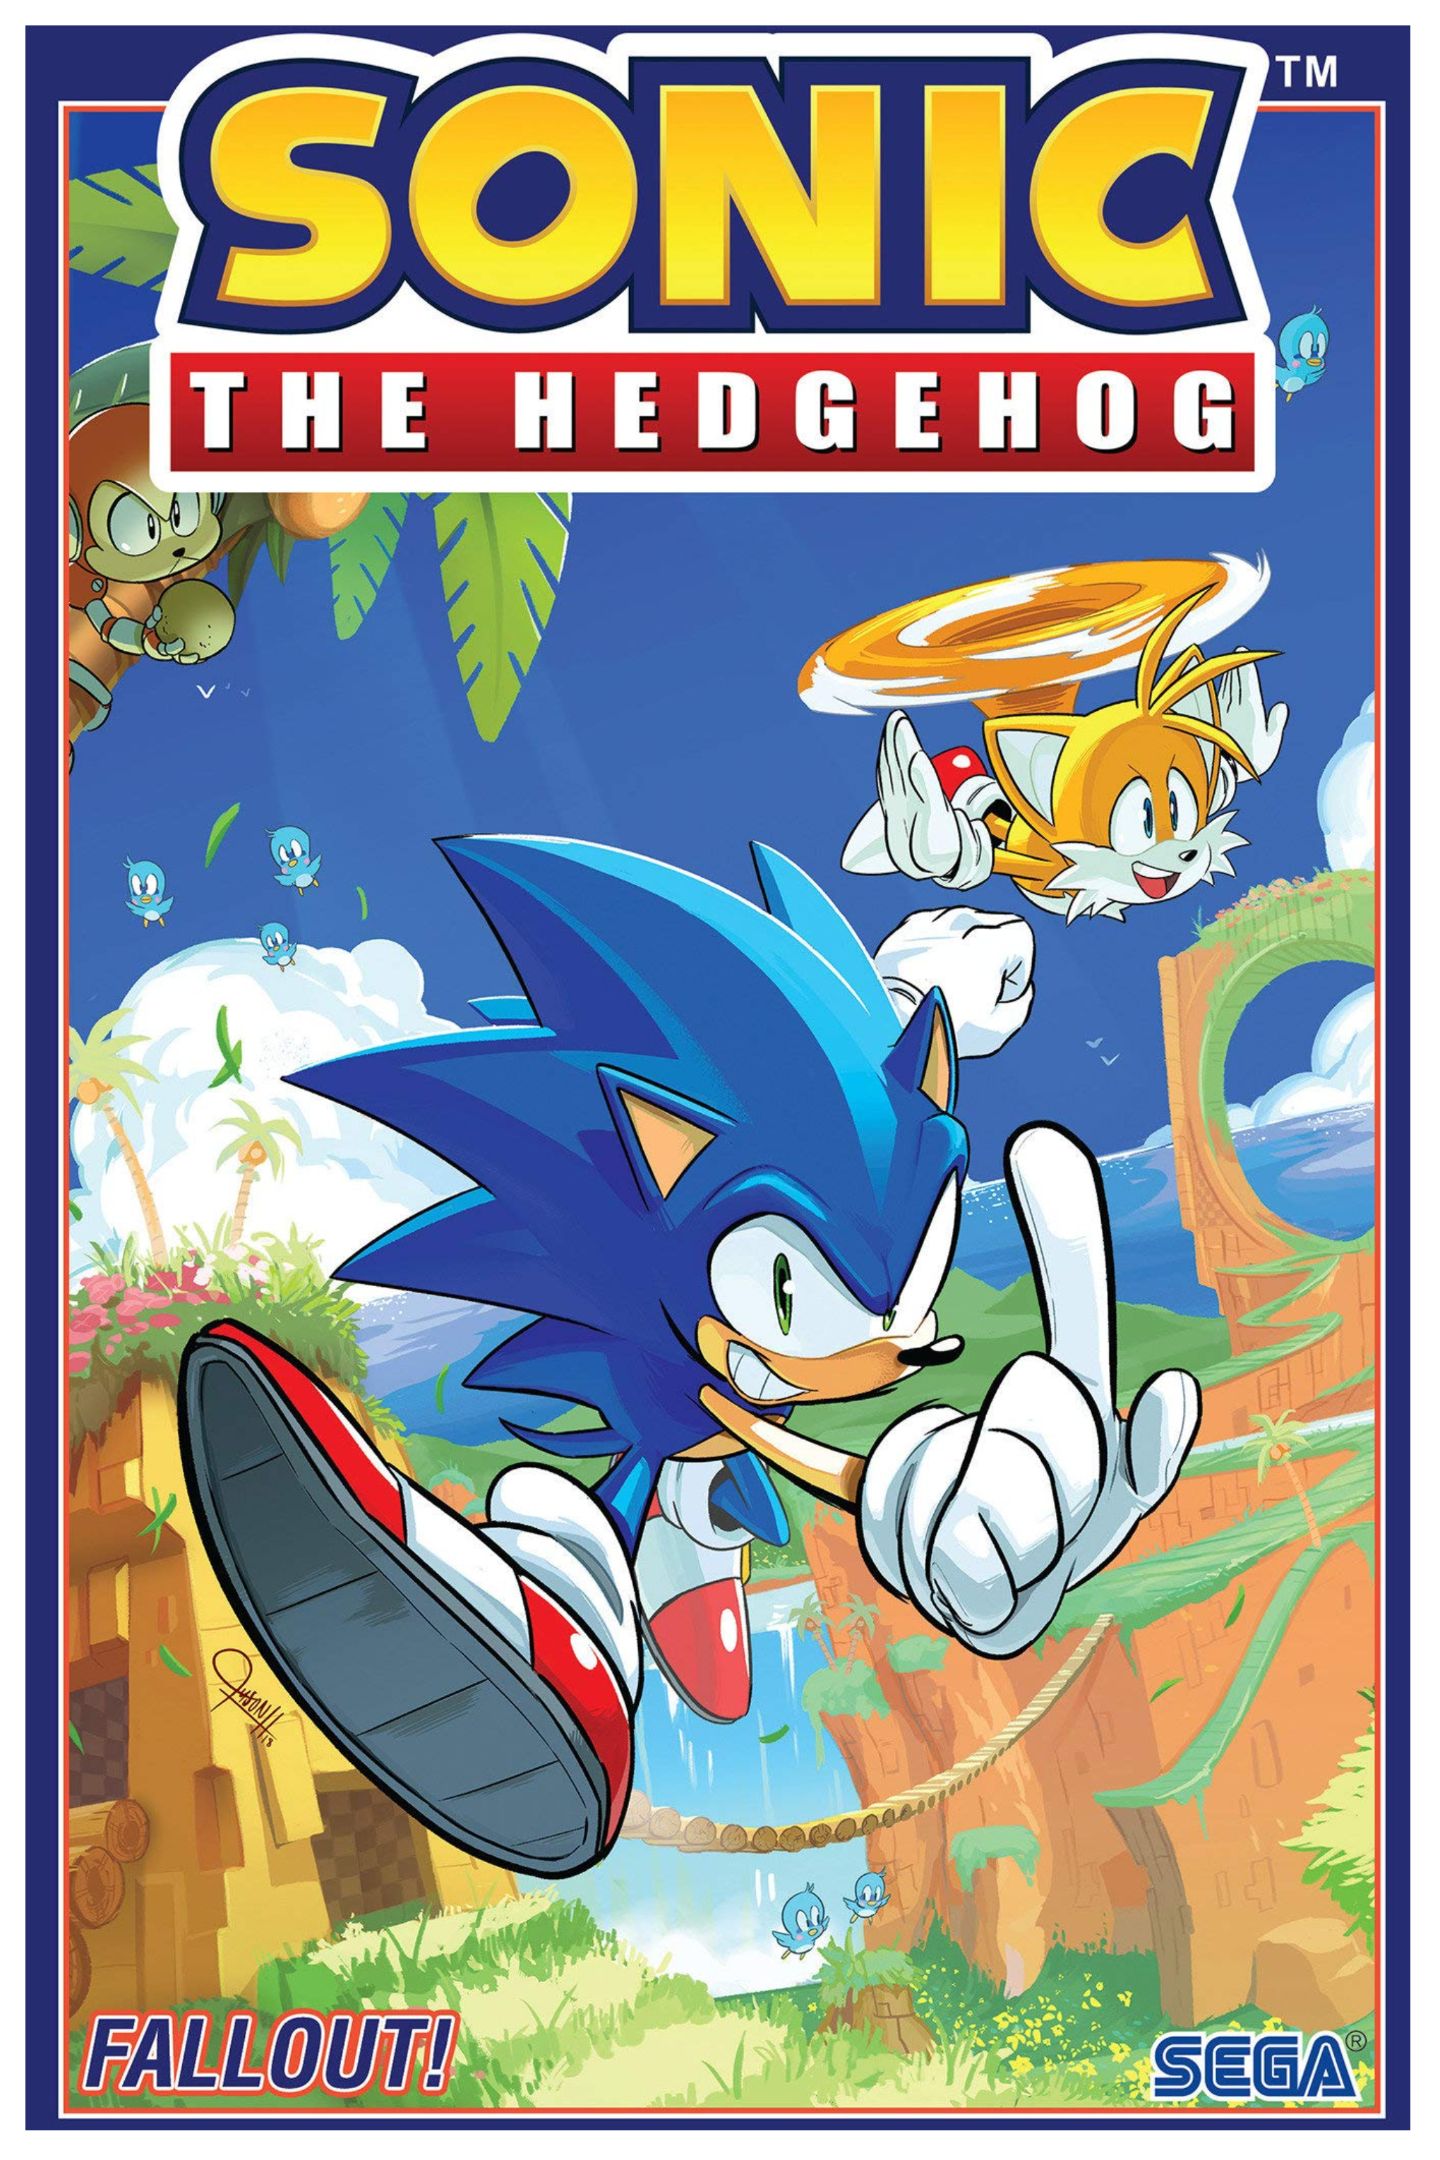 Sonic the Hedgehog comic book